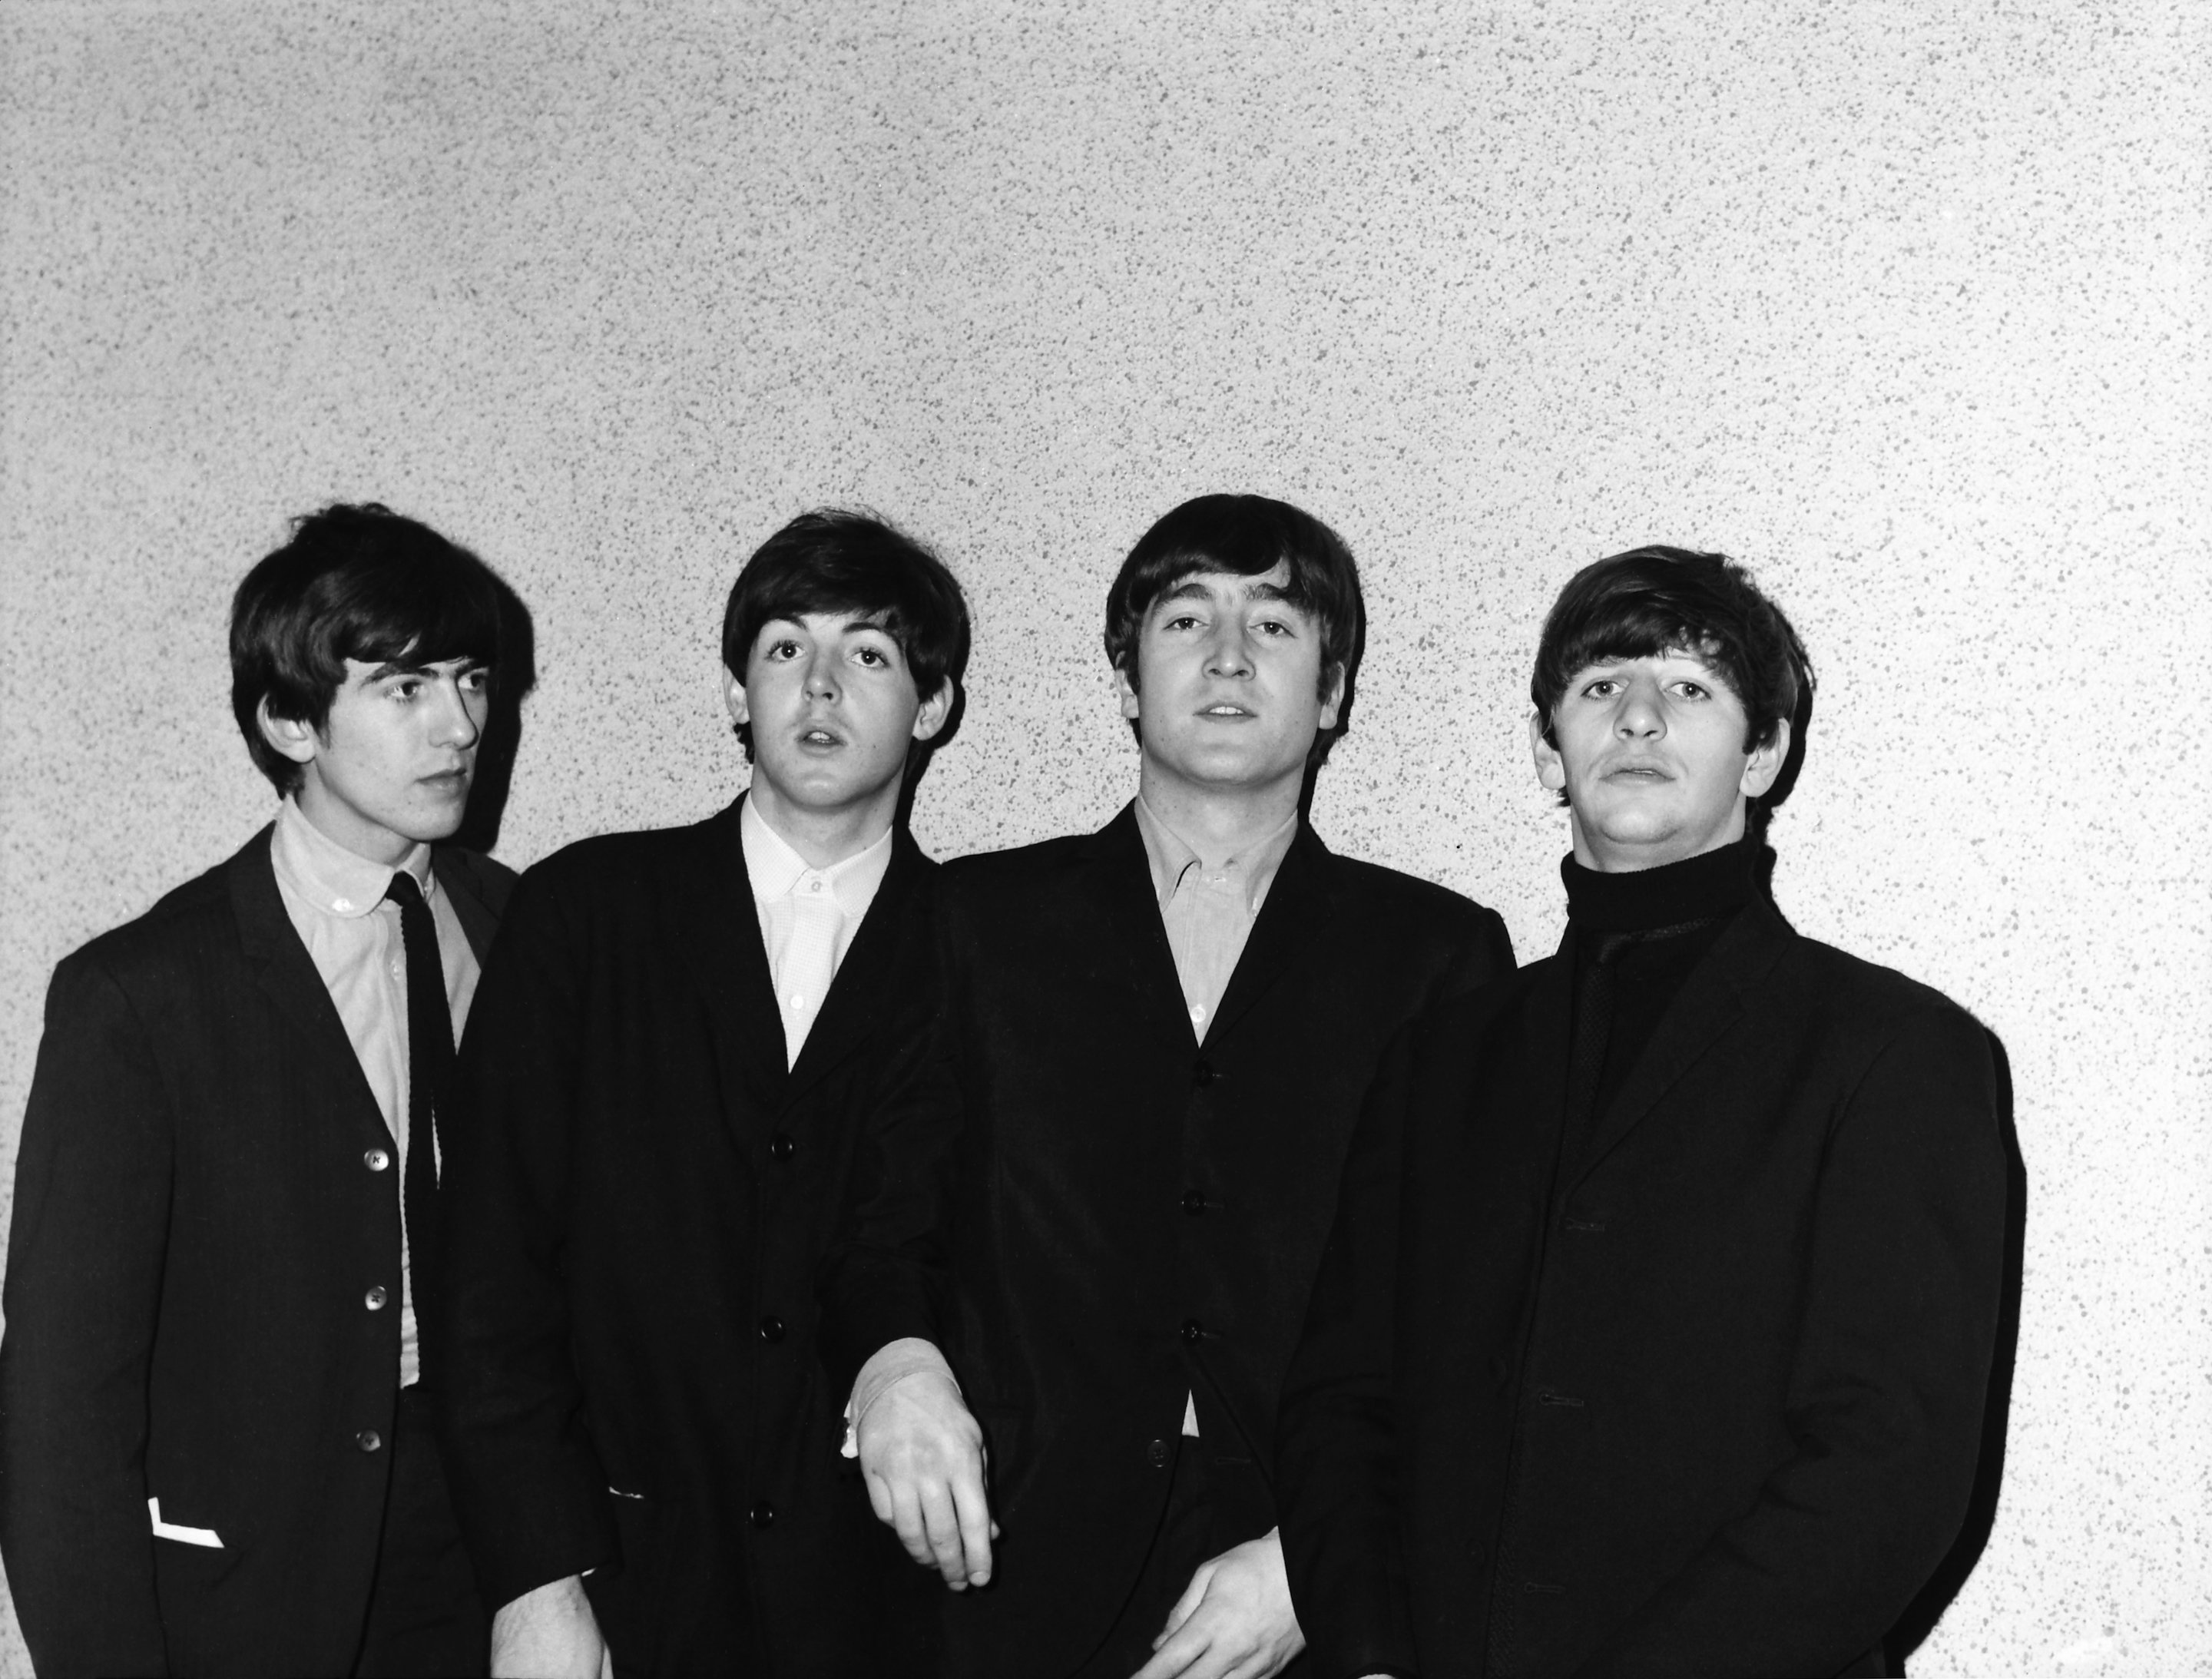 George Harrison, Paul McCartney, John Lennon, and Ringo Starr of the Beatles play Exeter's ABC Cinema